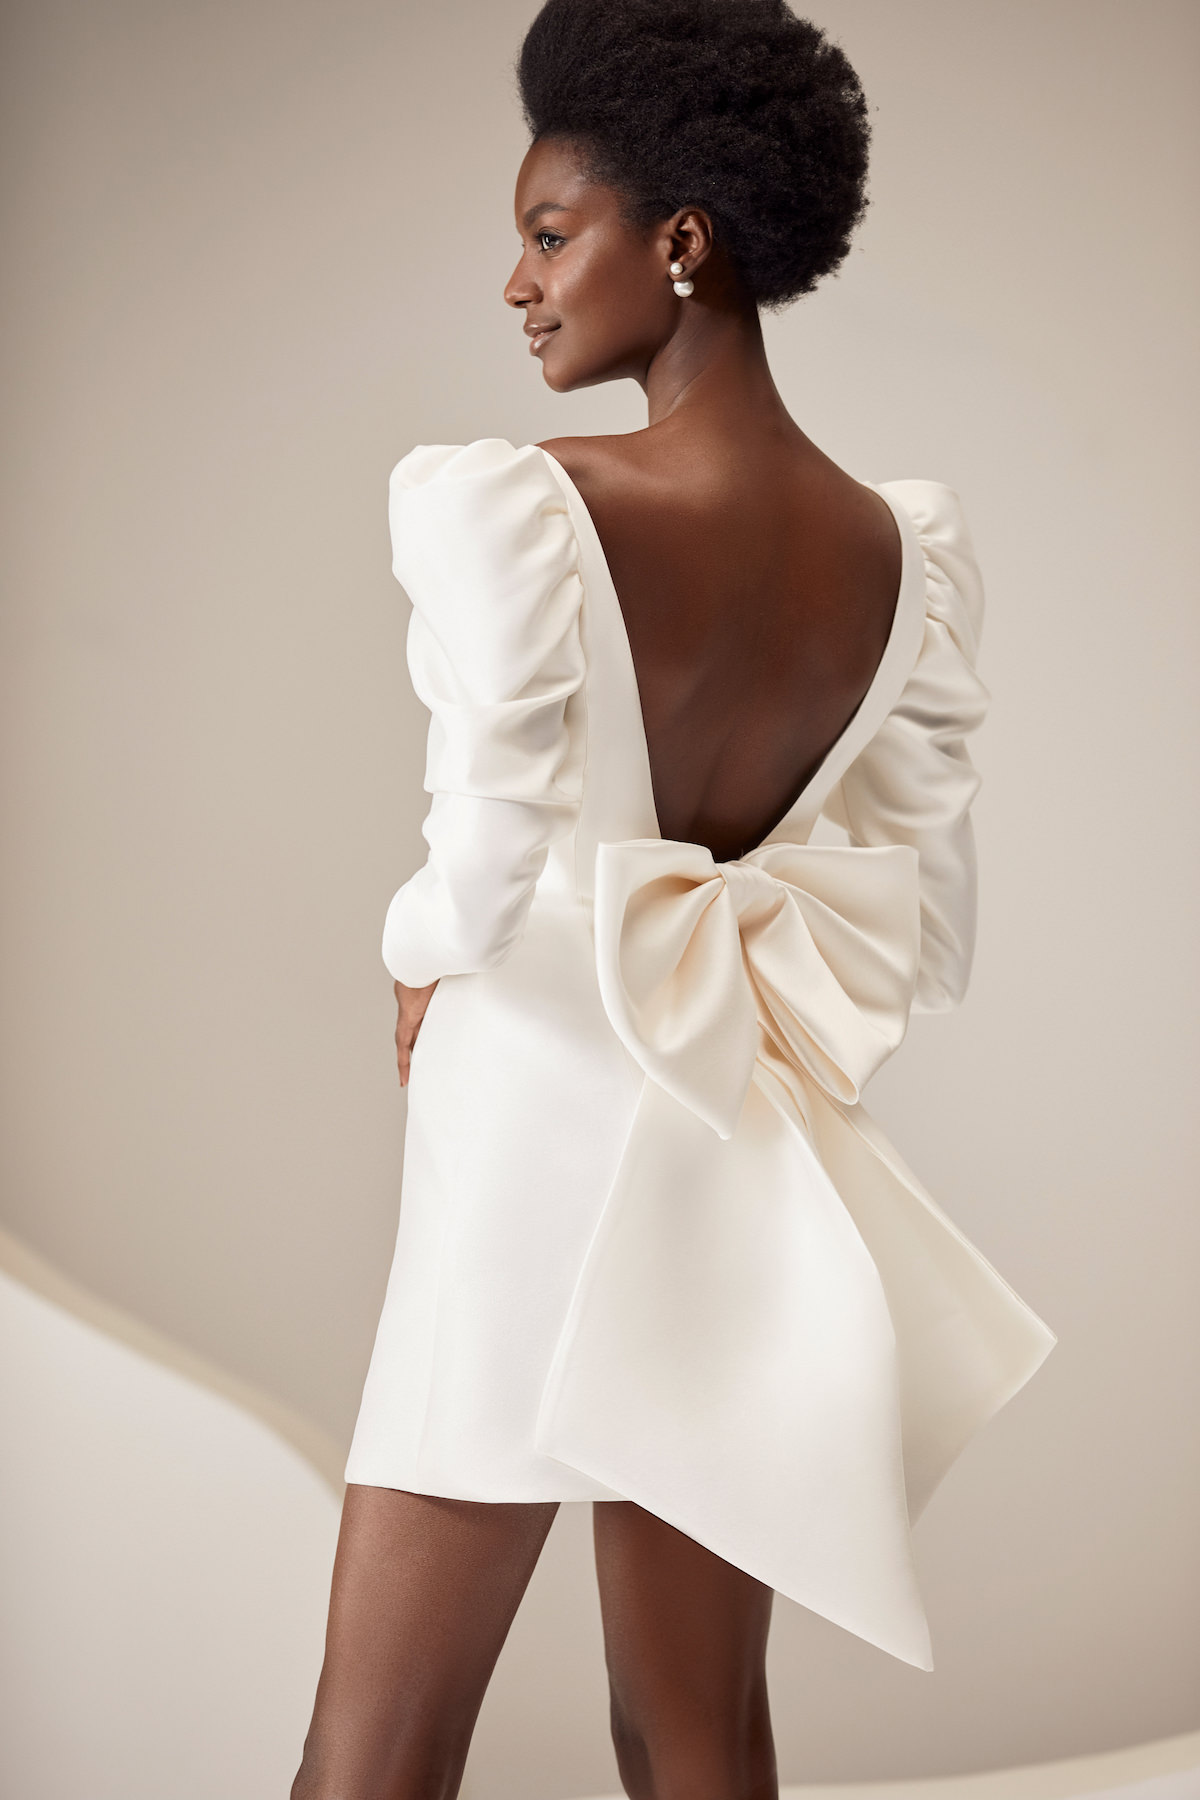 Open back short Wedding Dress by Milla Nova - Honey white lace